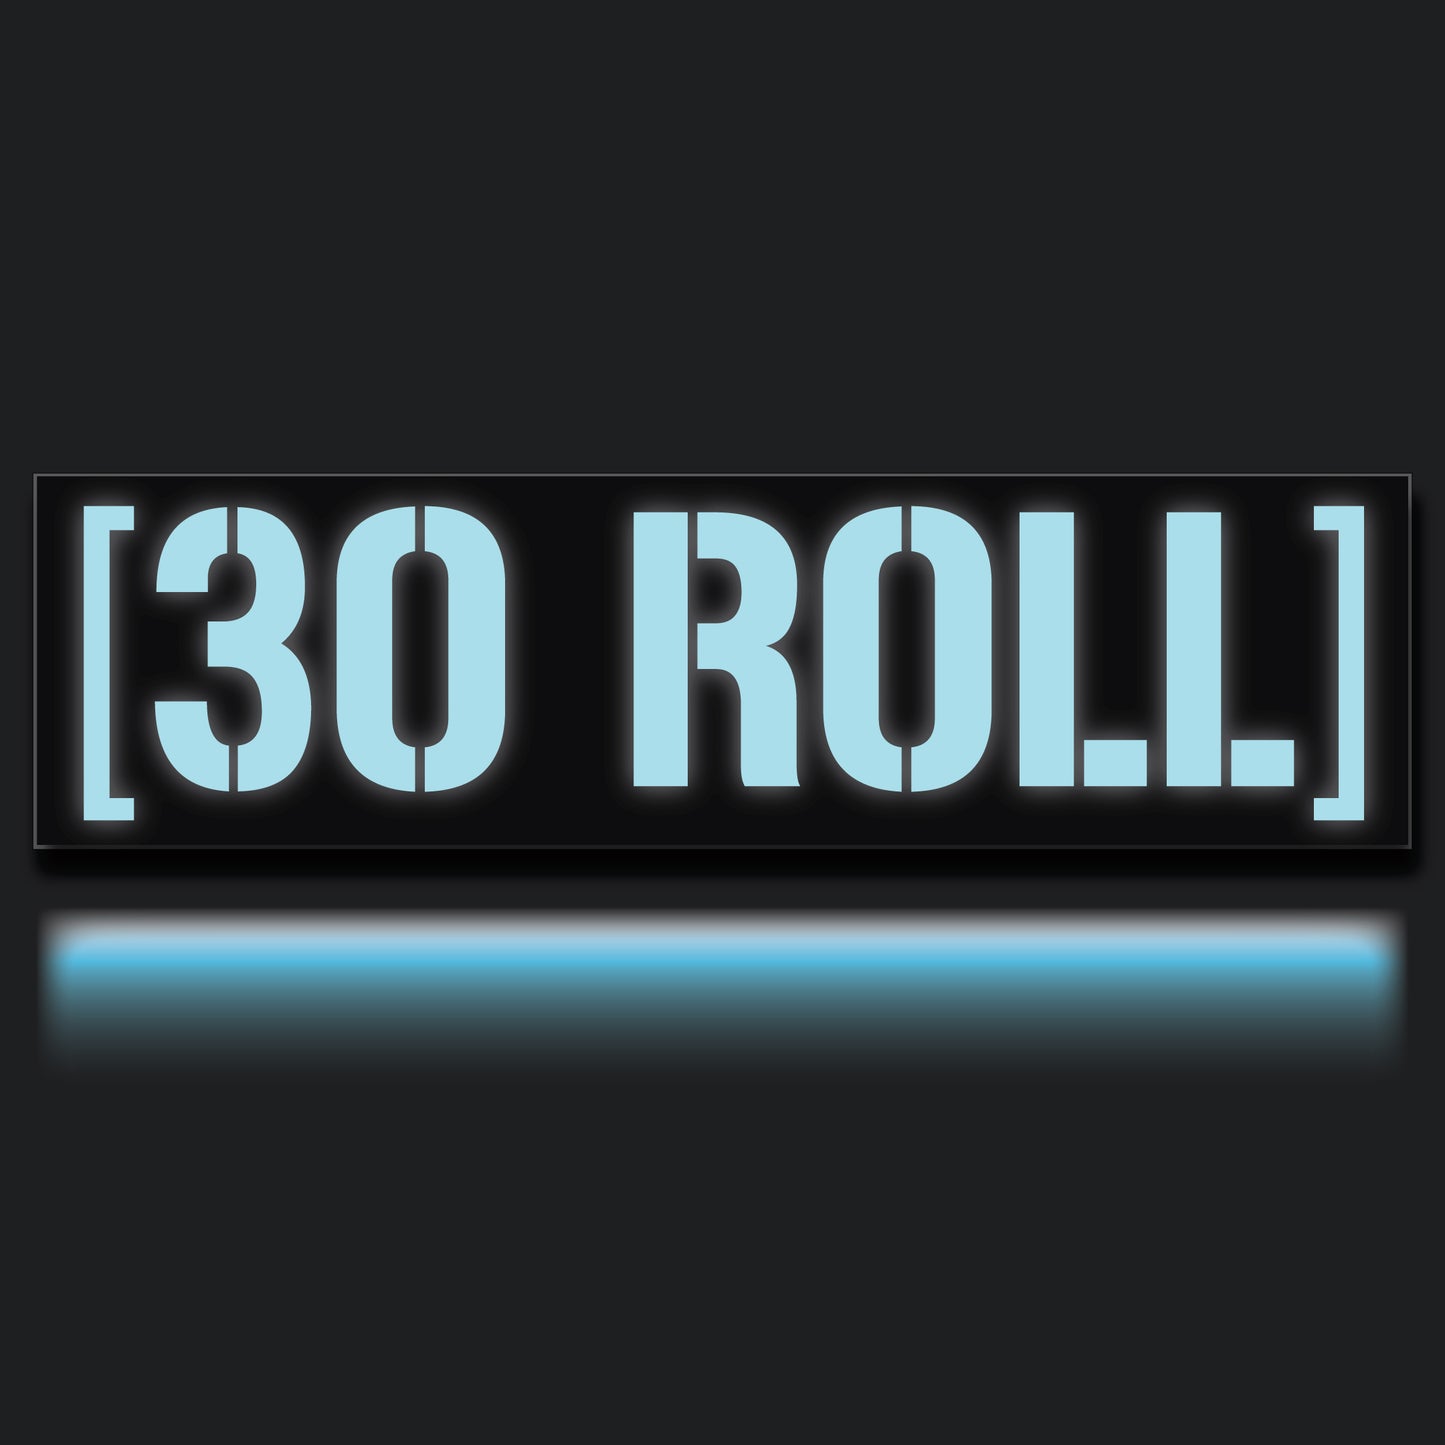 30 Roll